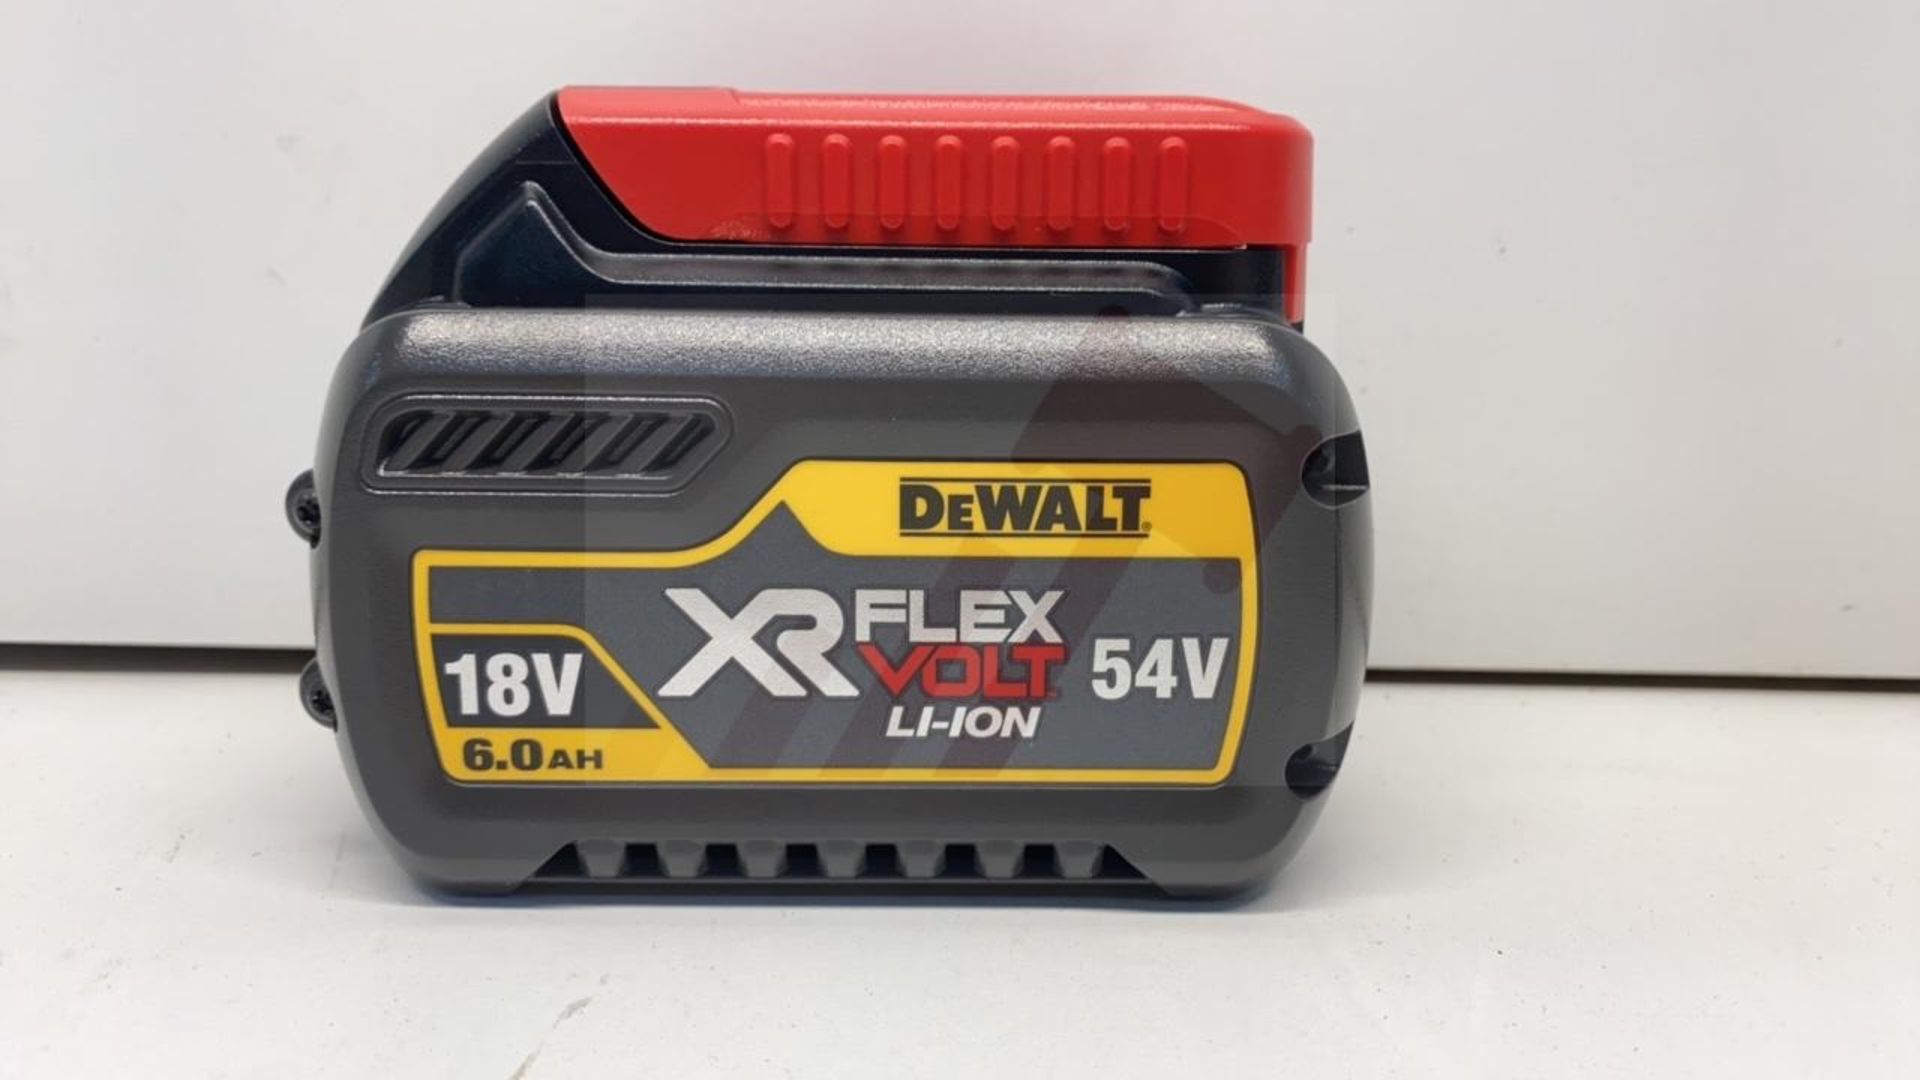 DeWalt DCB546 18v / 54v XR FLEXVOLT 6.0Ah Battery